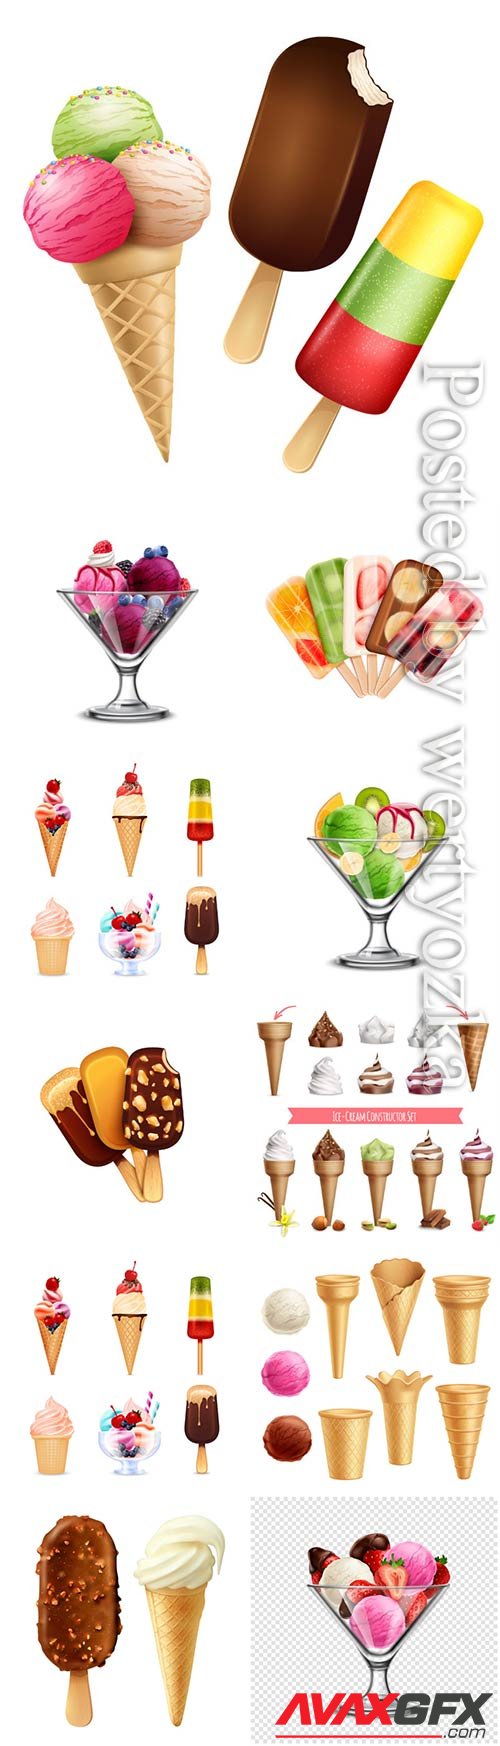 Ice cream platter, chocolate and vanilla ice cream with berries in vector